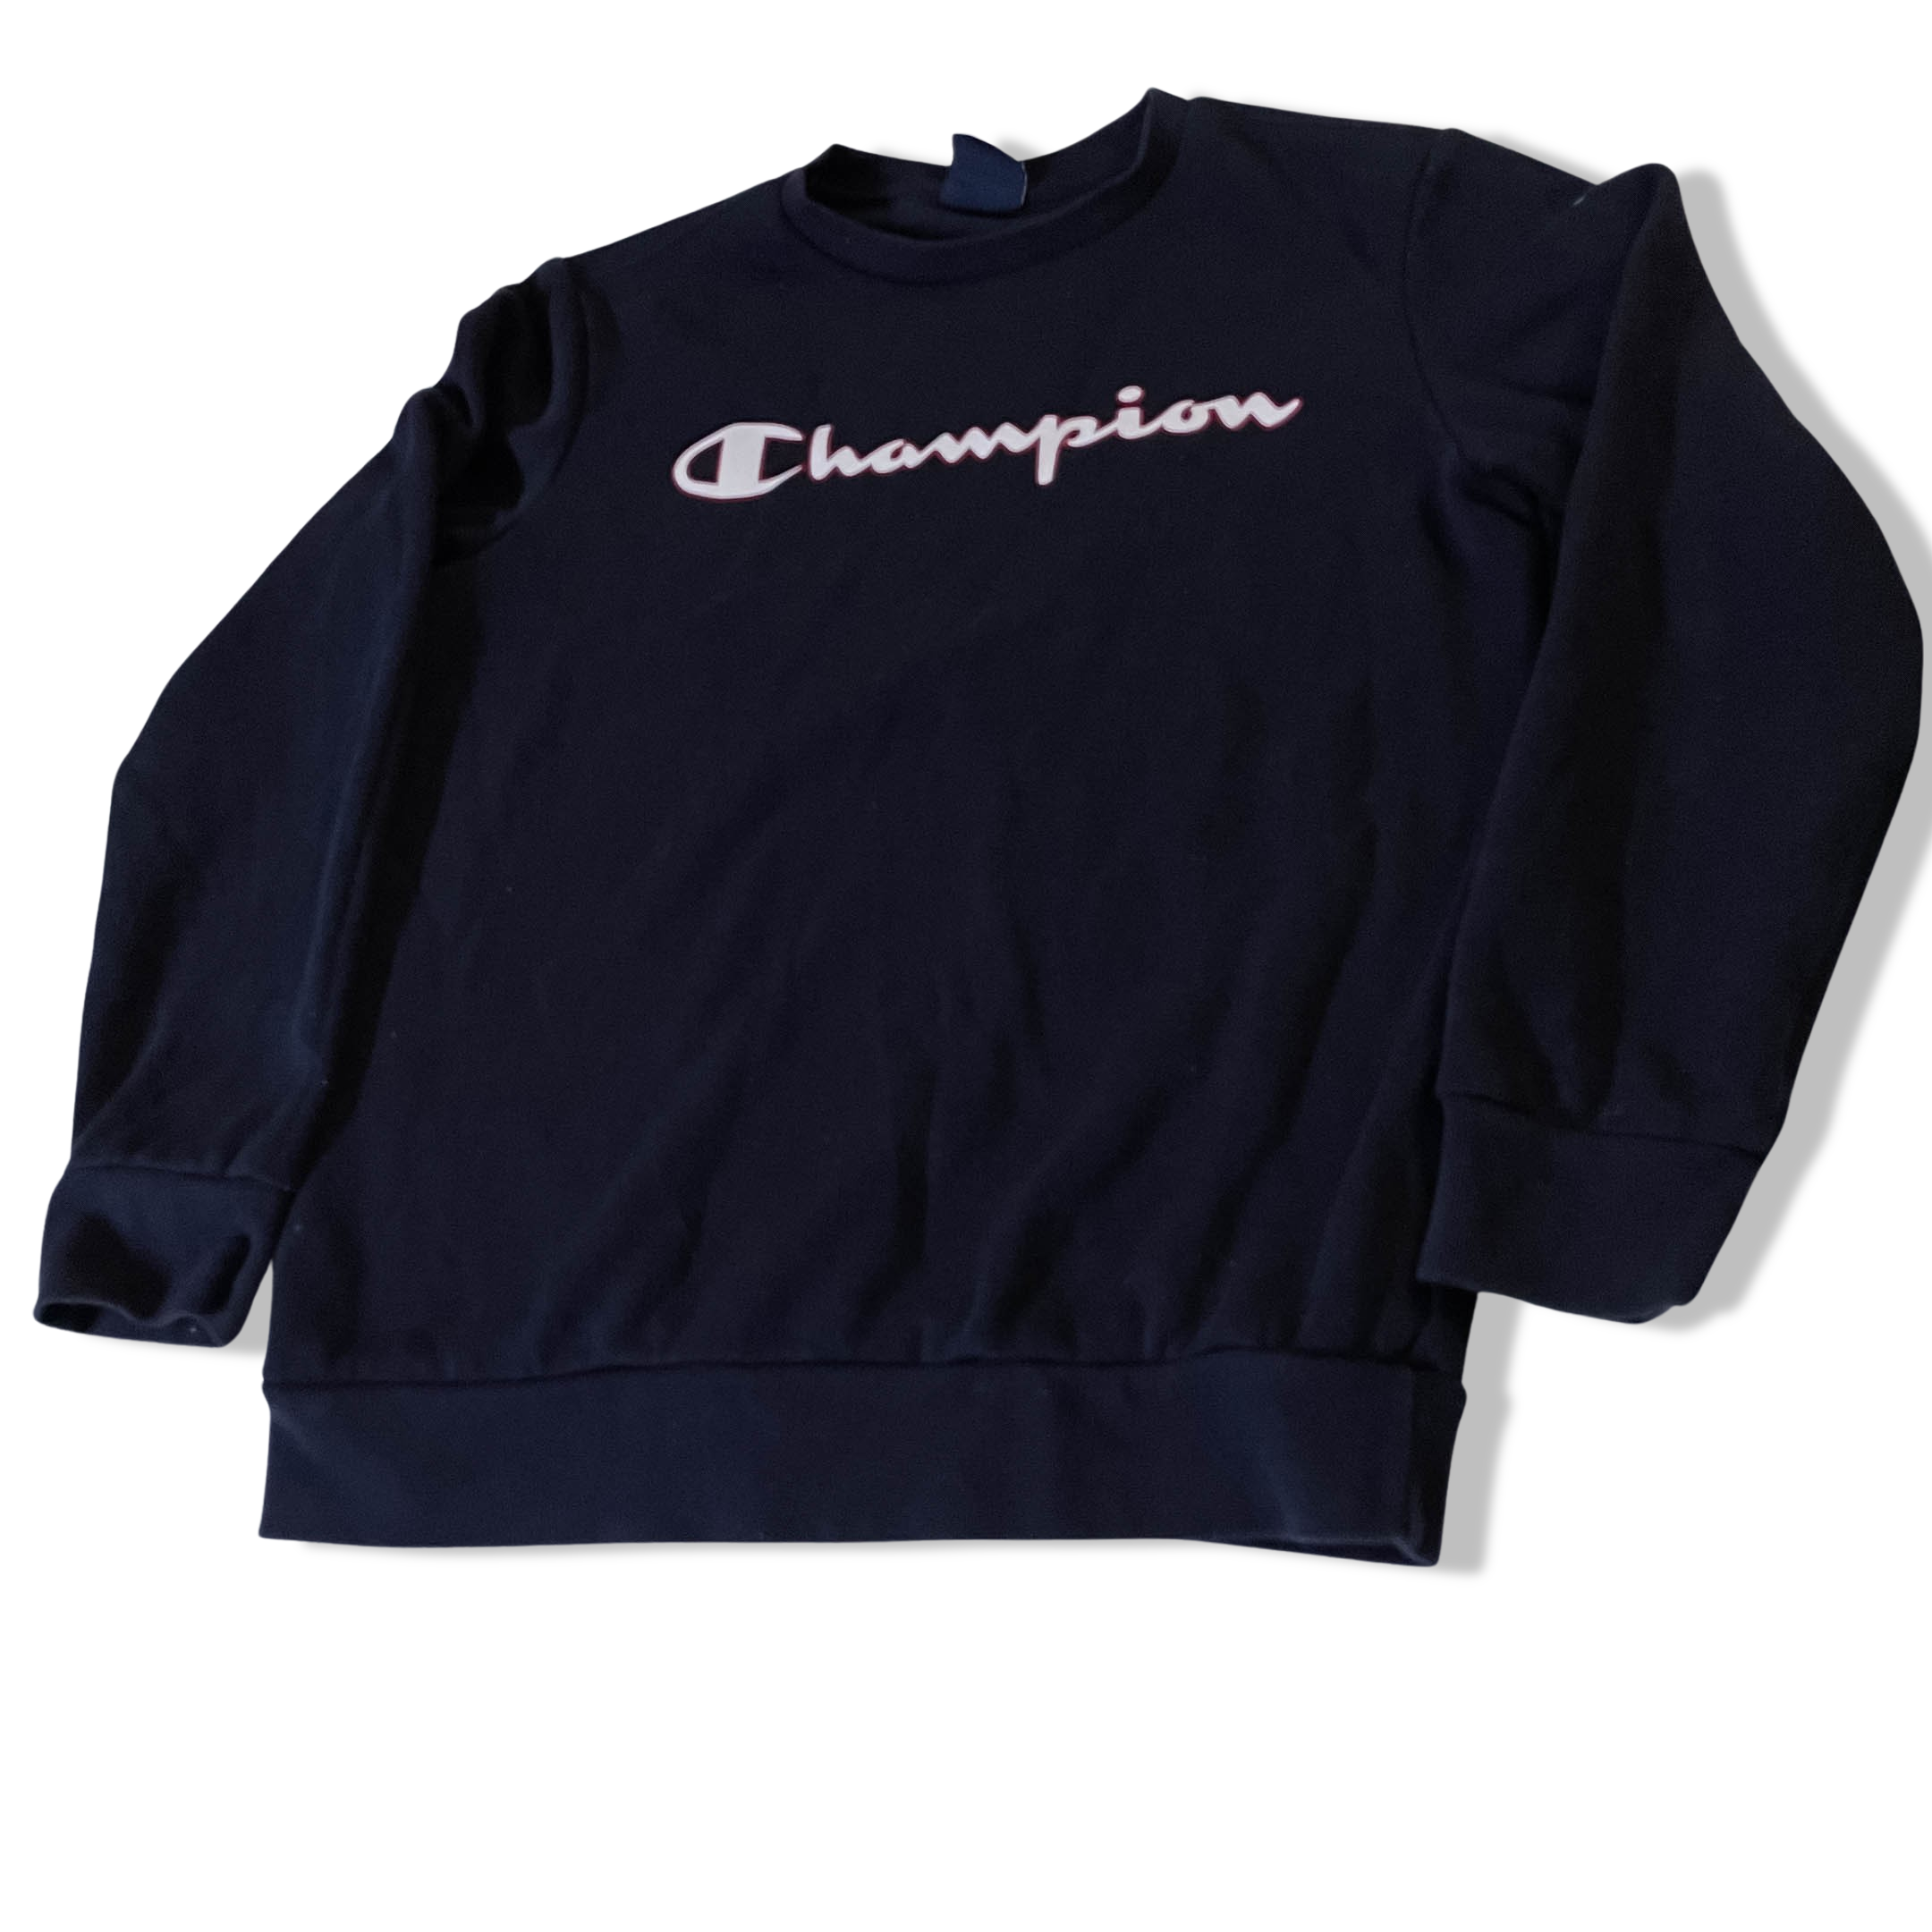 Vintage champion navy sweatshirt in XS